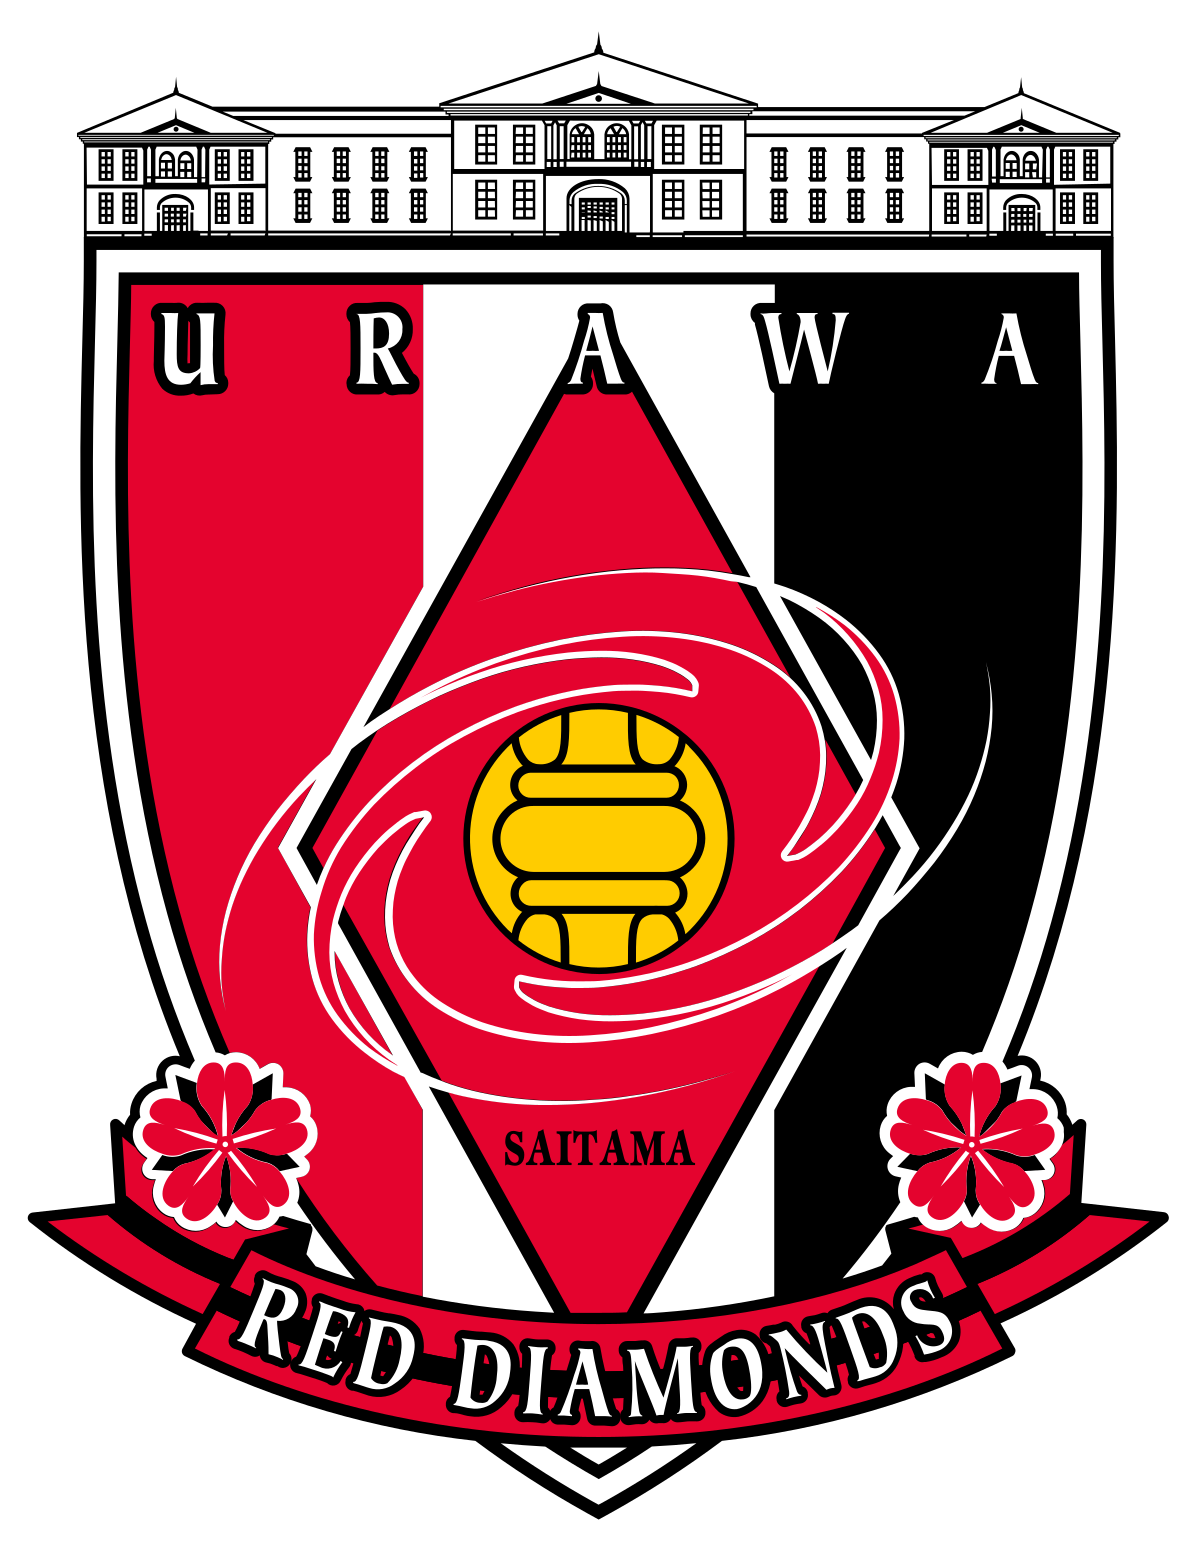 Nữ Urawa Red